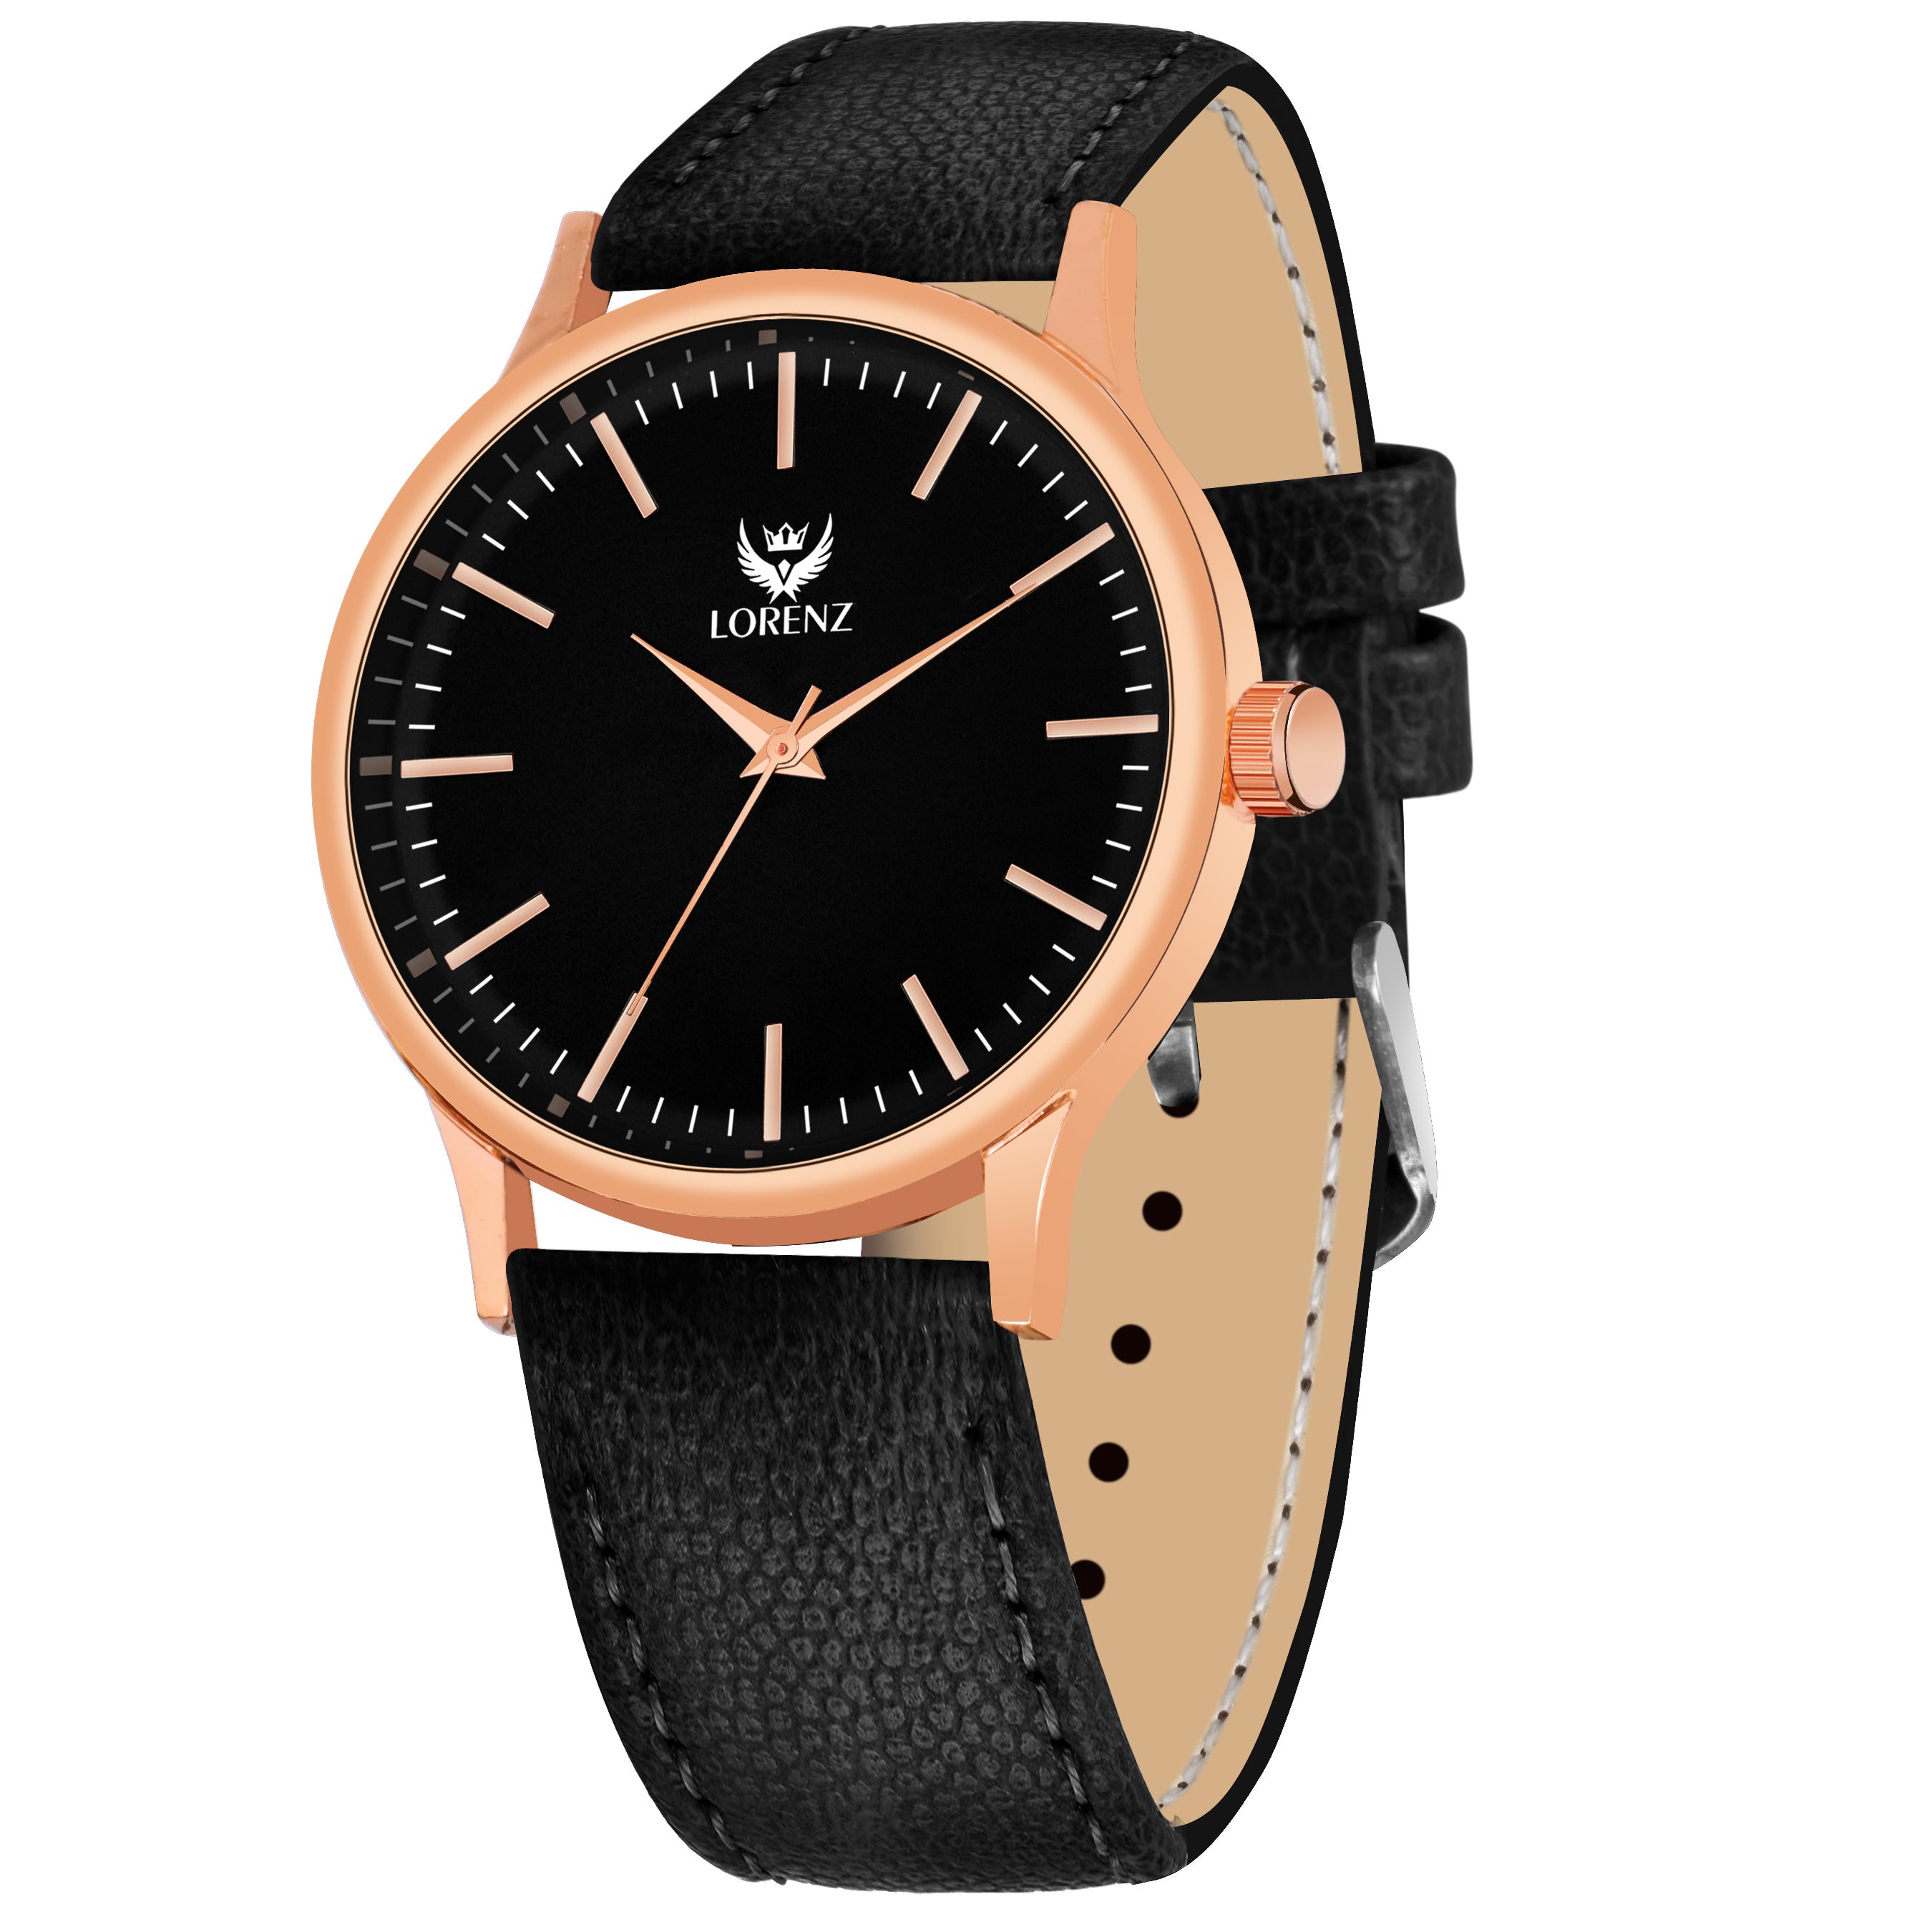 LORENZ Slim Black Dial Watch & Black Wallet Combo for Men and Boys- CM-4054WL-91